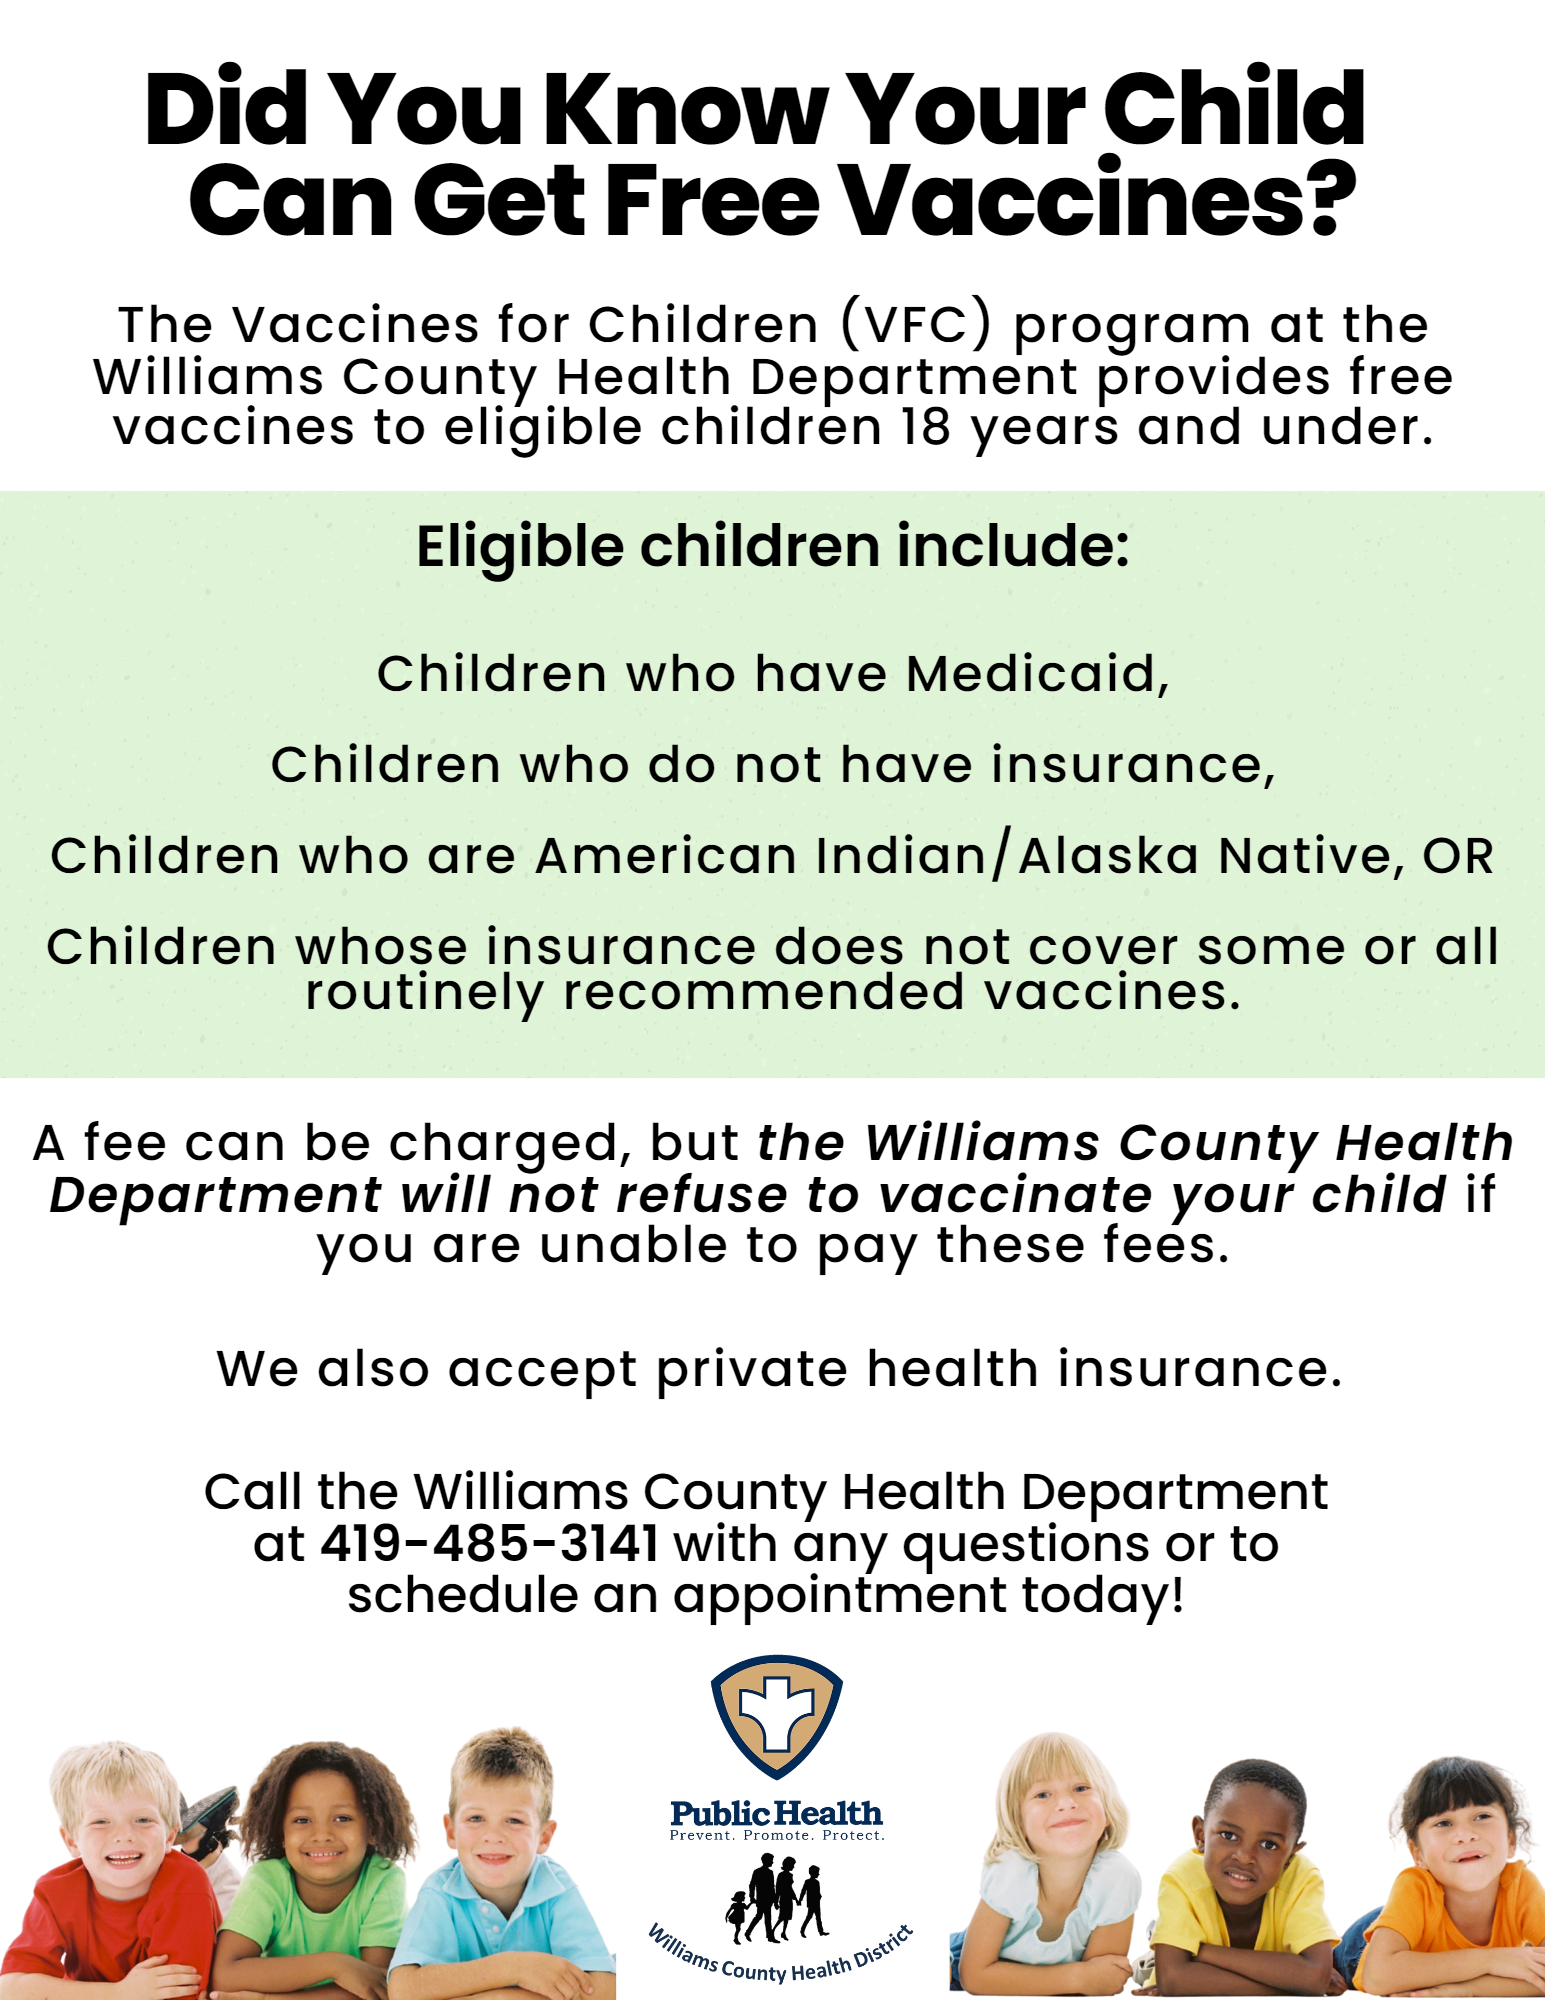 Get Free Vaccines